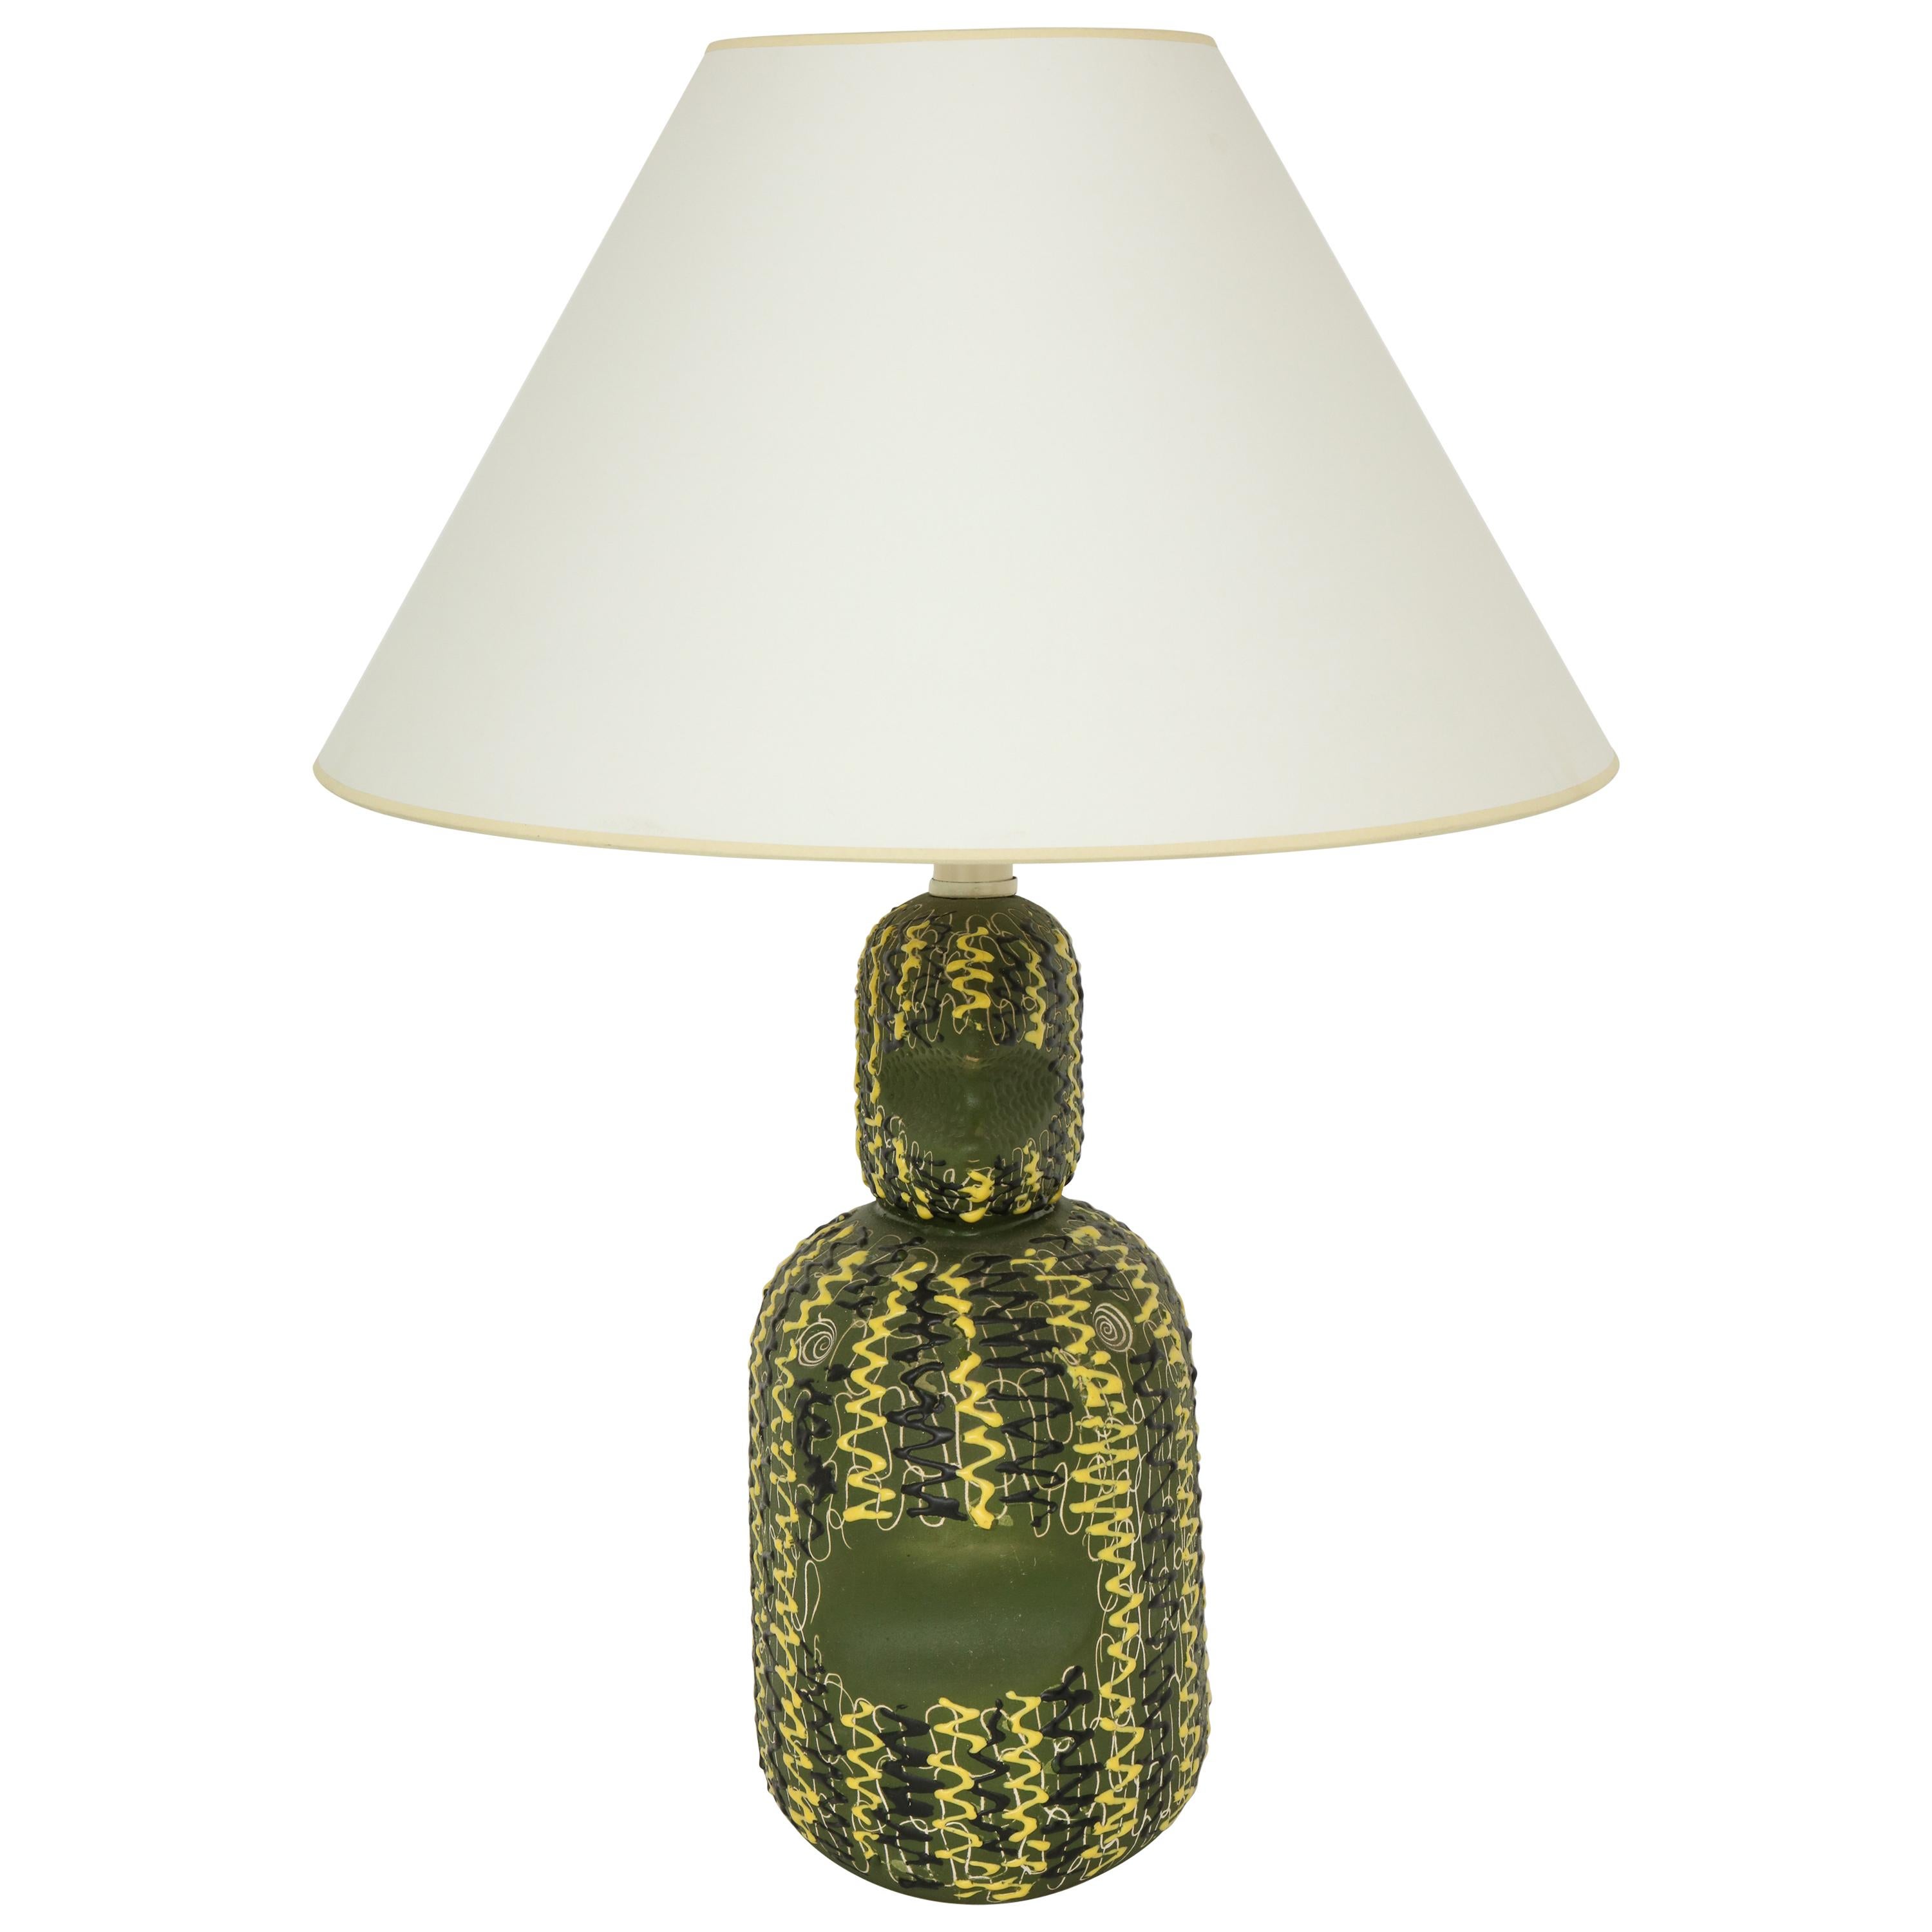 Midcentury Italian Green and Yellow Ceramic Table Lamp